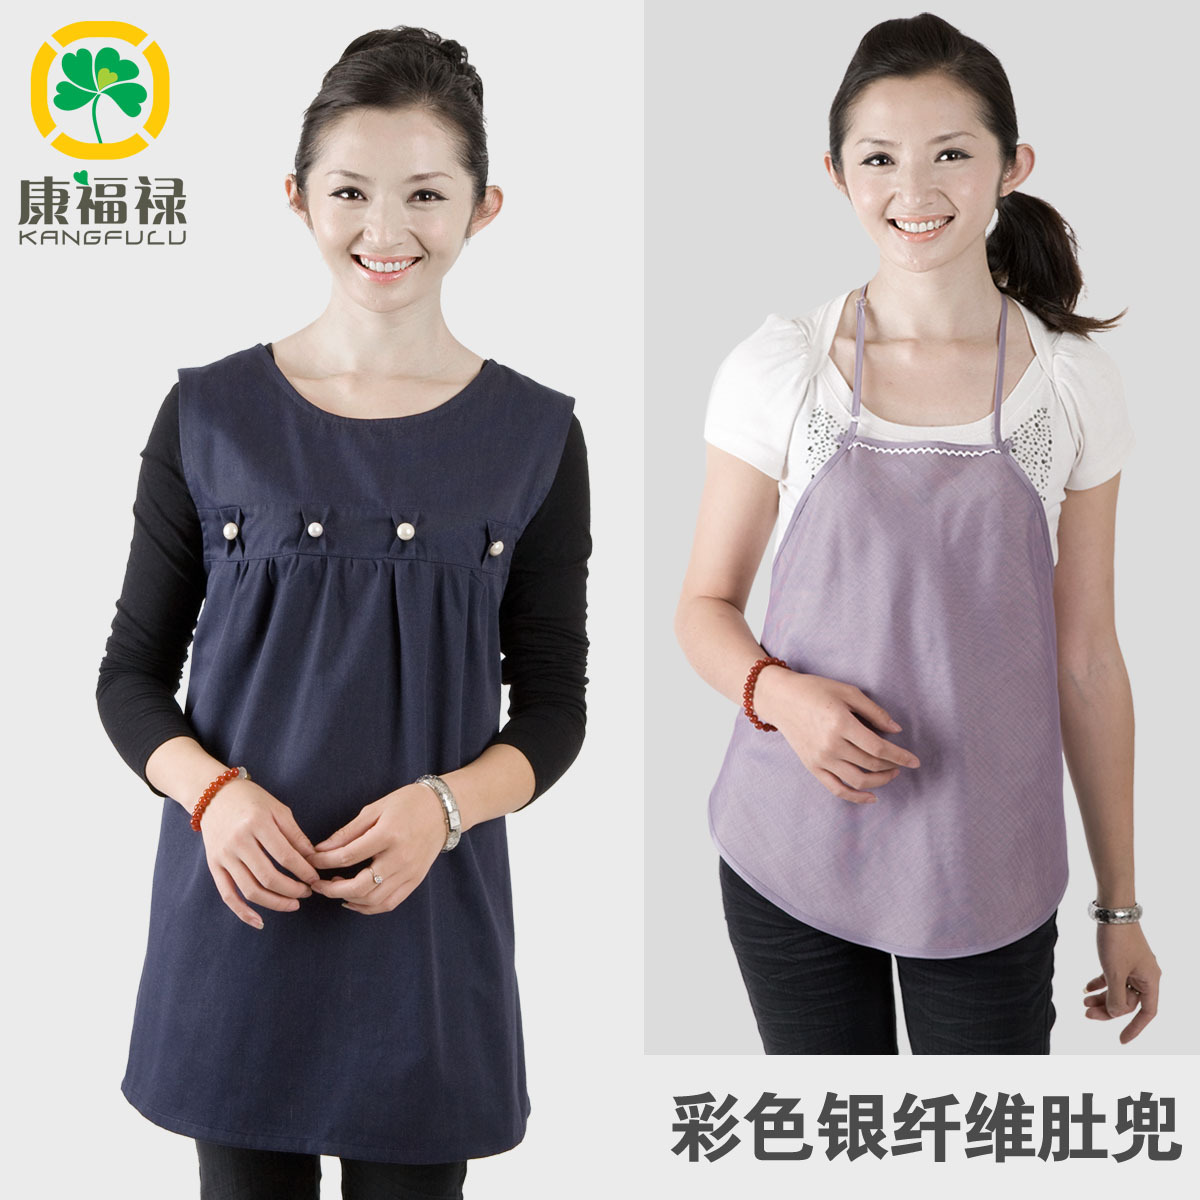 Dual nano silver radiation-resistant maternity clothing maternity radiation-resistant clothes 603a